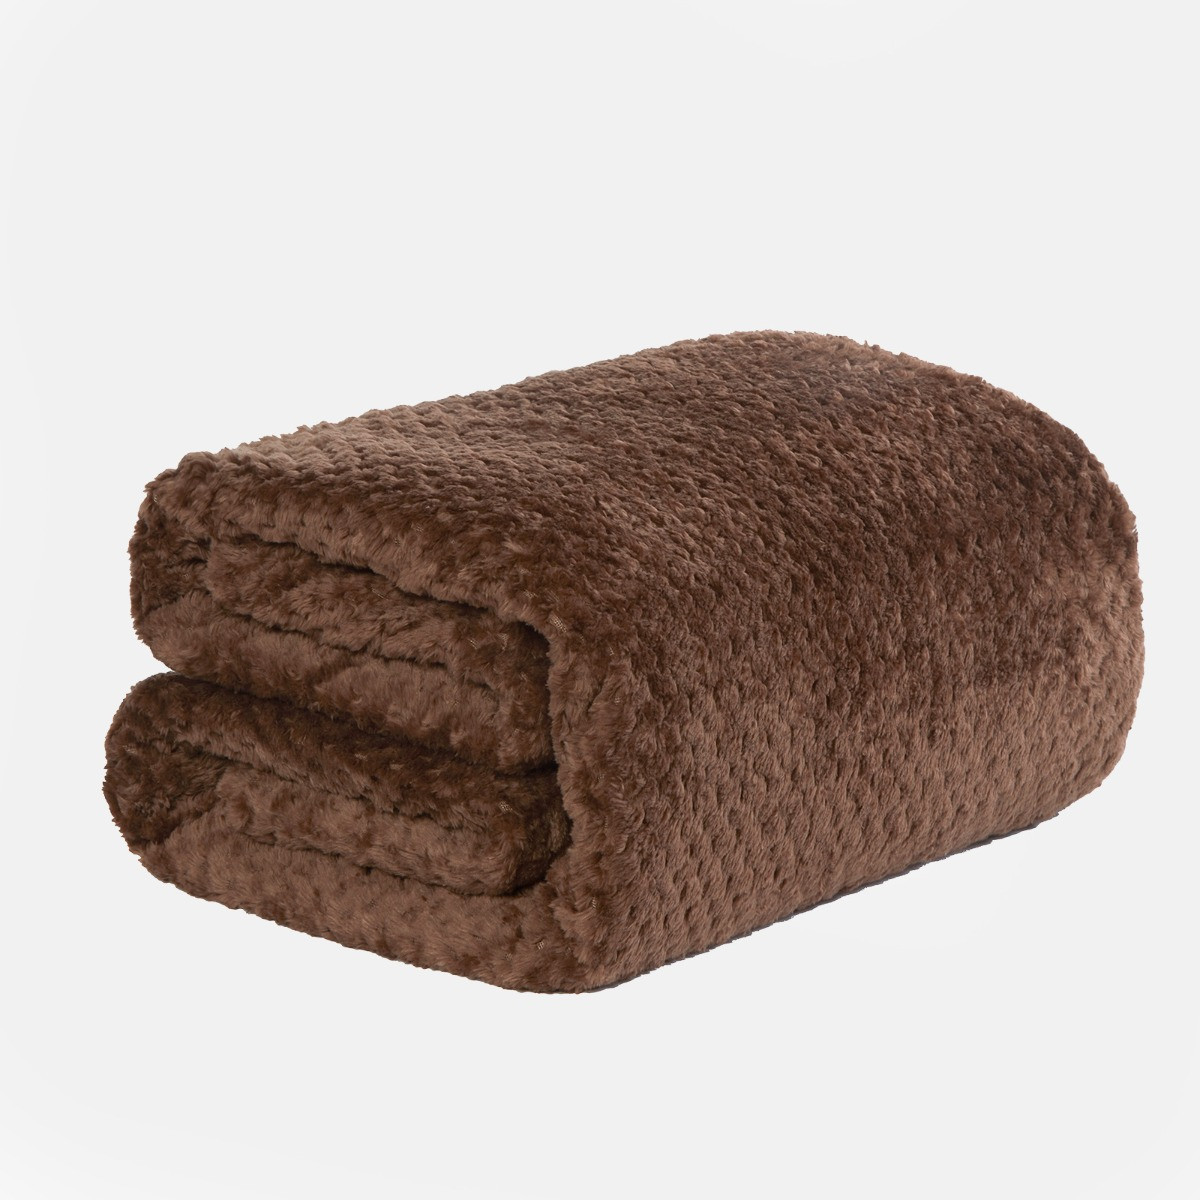 Luxury Waffle Mink Warm Throw Over Sofa Bed Soft Blanket 125 x 150cm Chocolate>